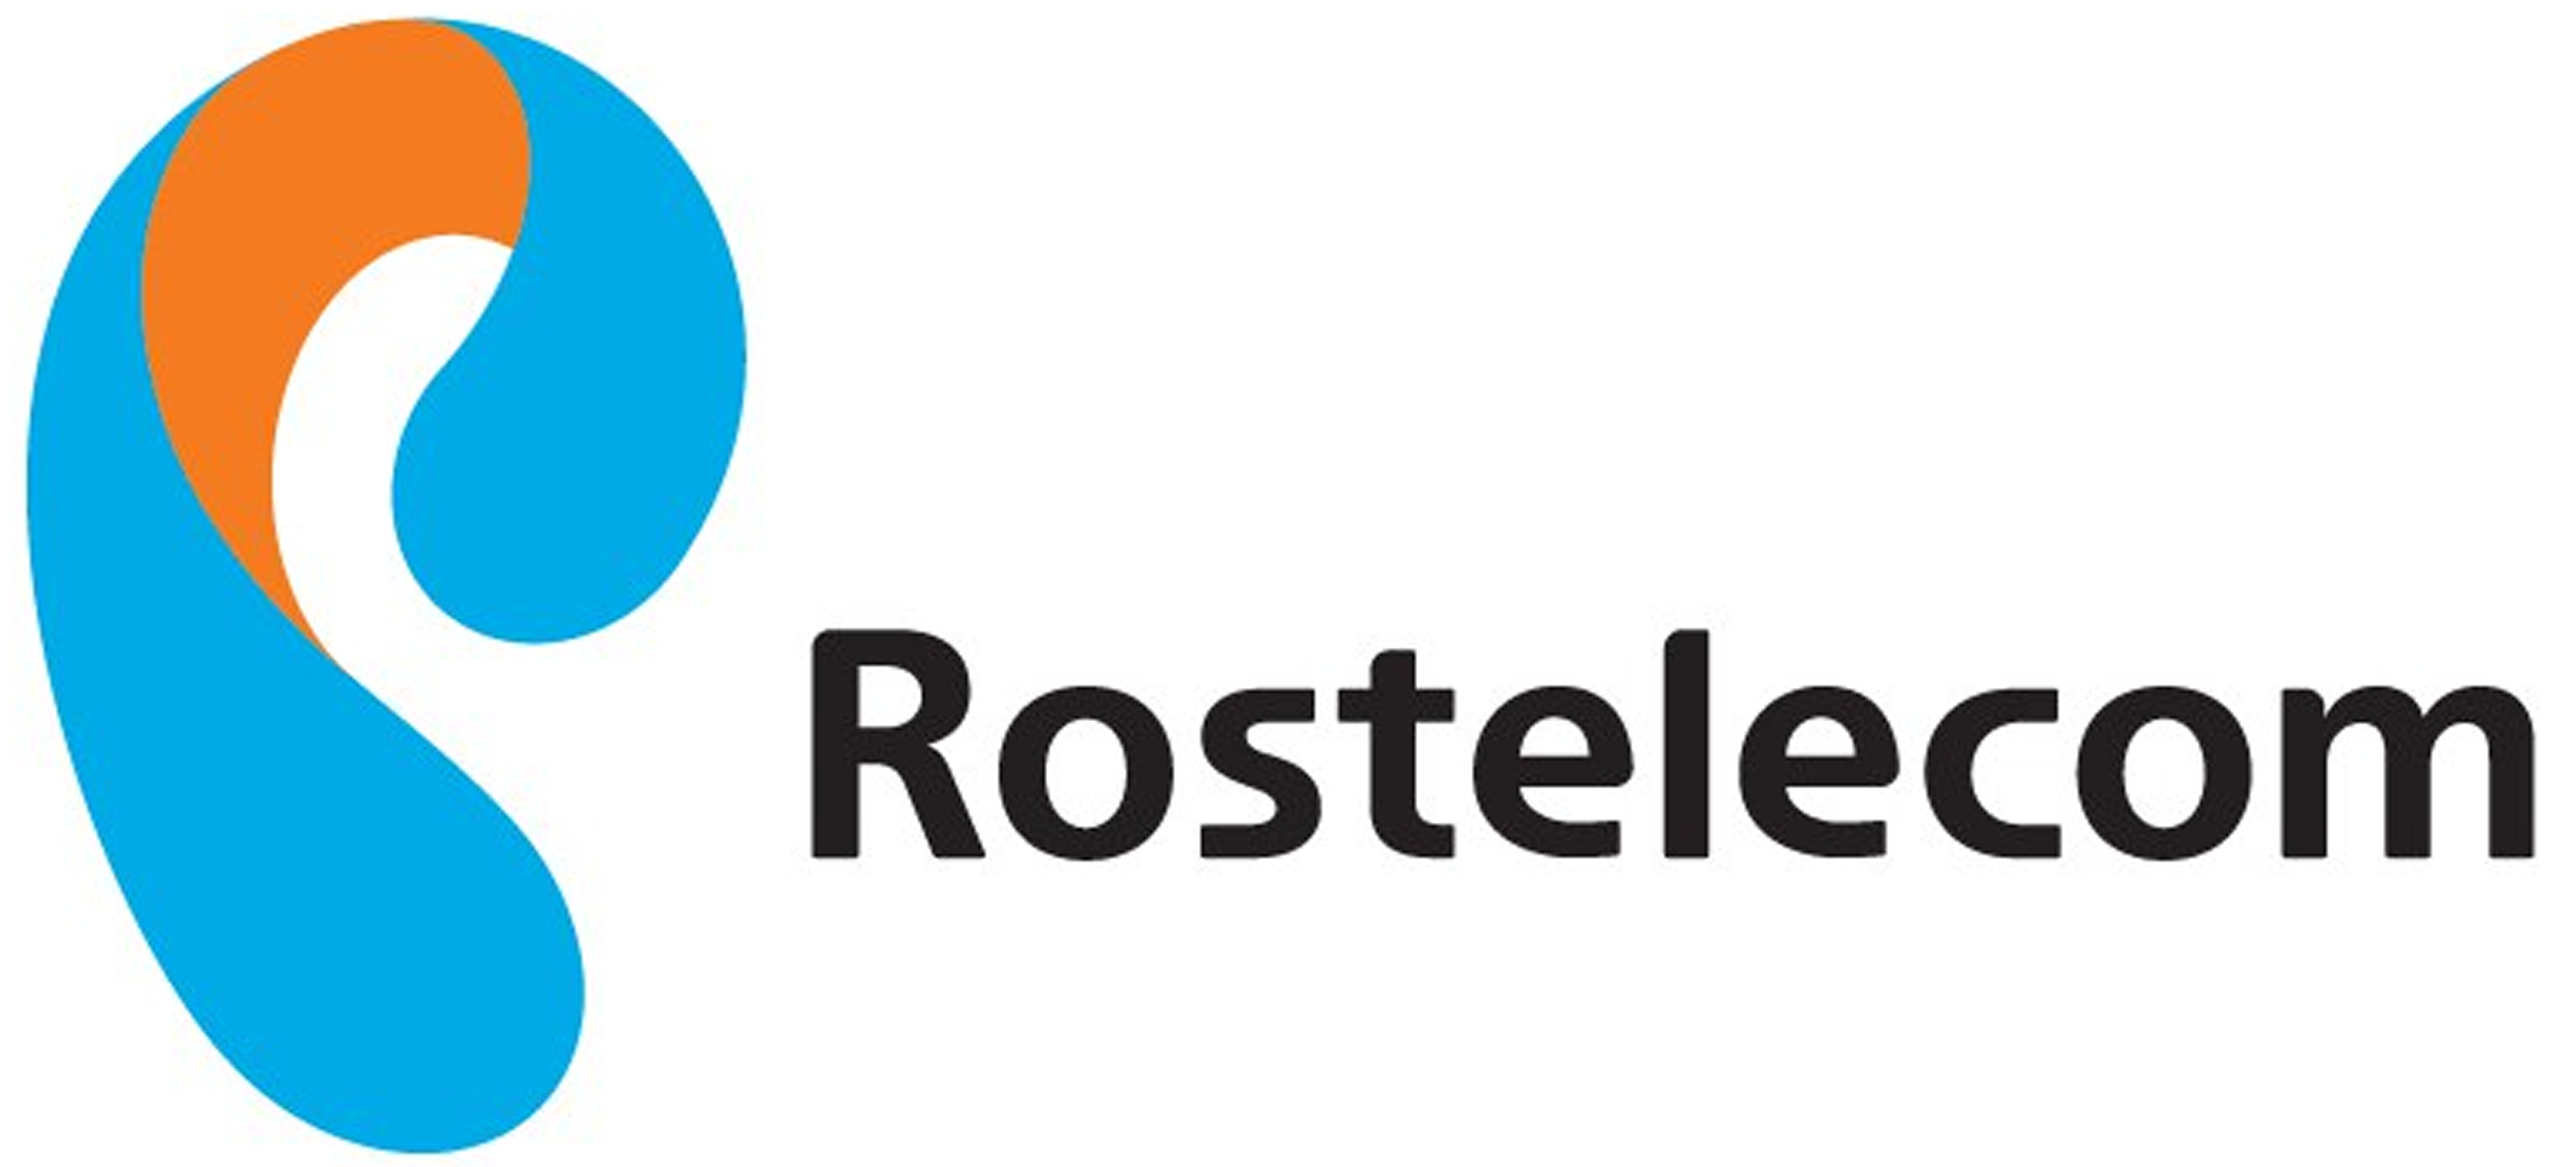 Rostelcom